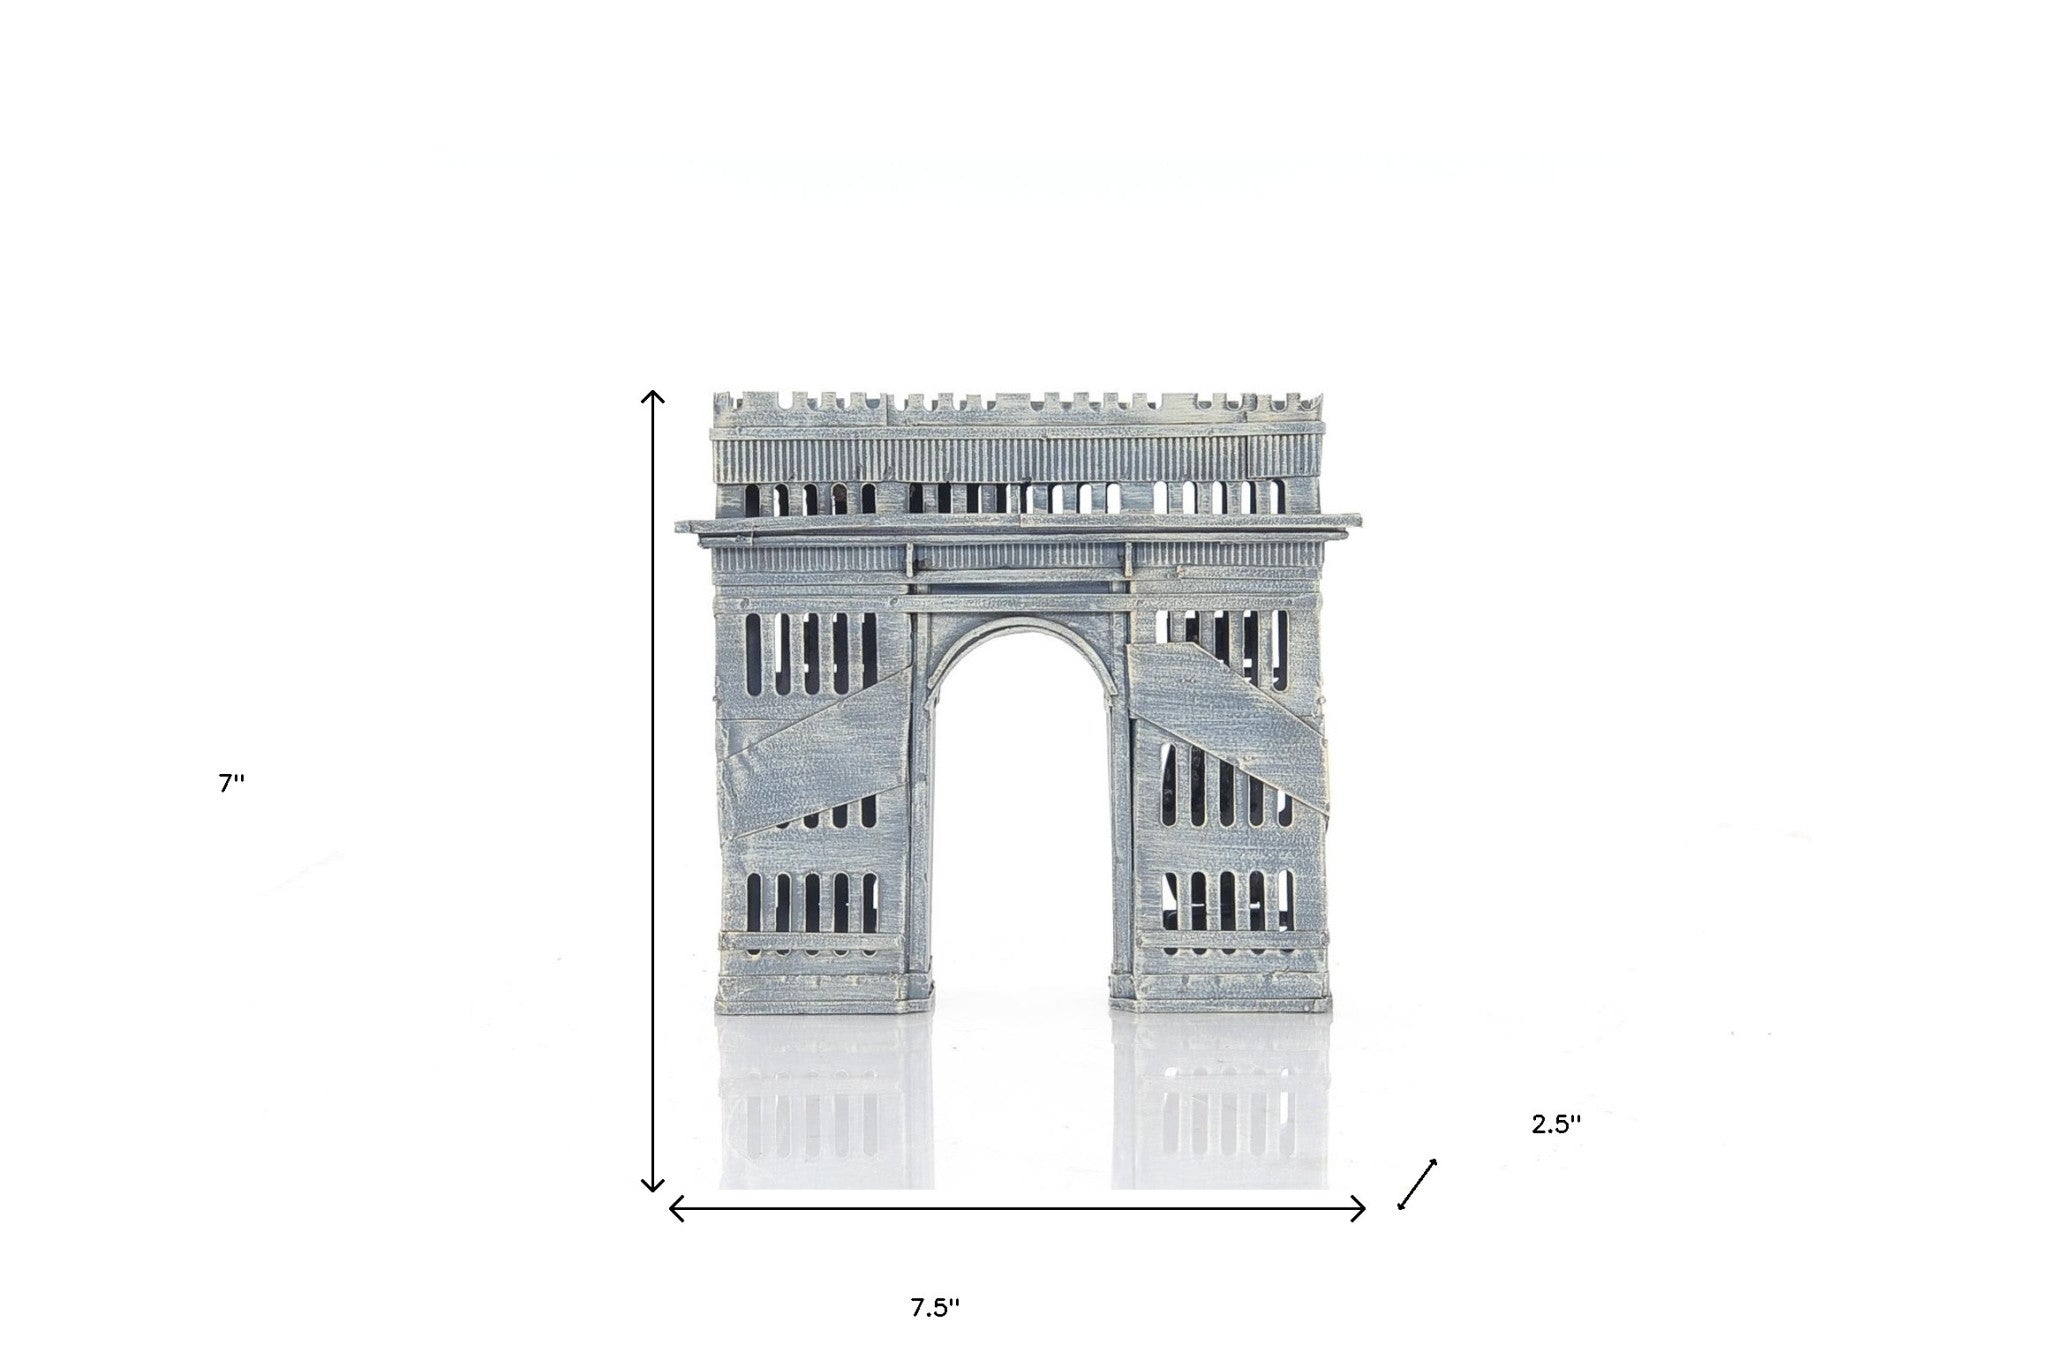 2.5" X 7.5" X 7" Arc De Triomphe Saving Box